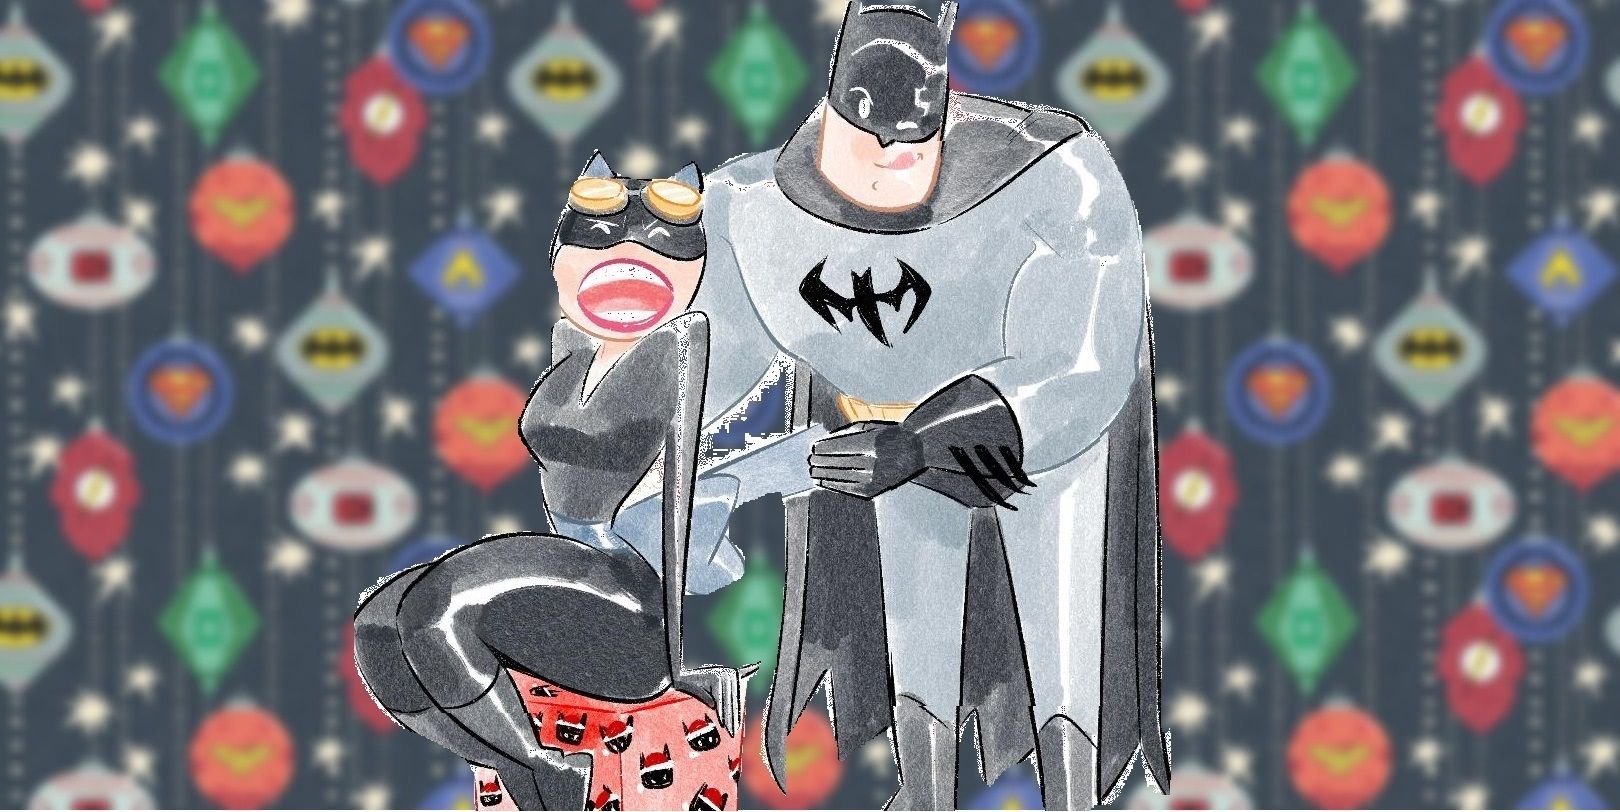 Batman unwrapping his cat-like Christmas present